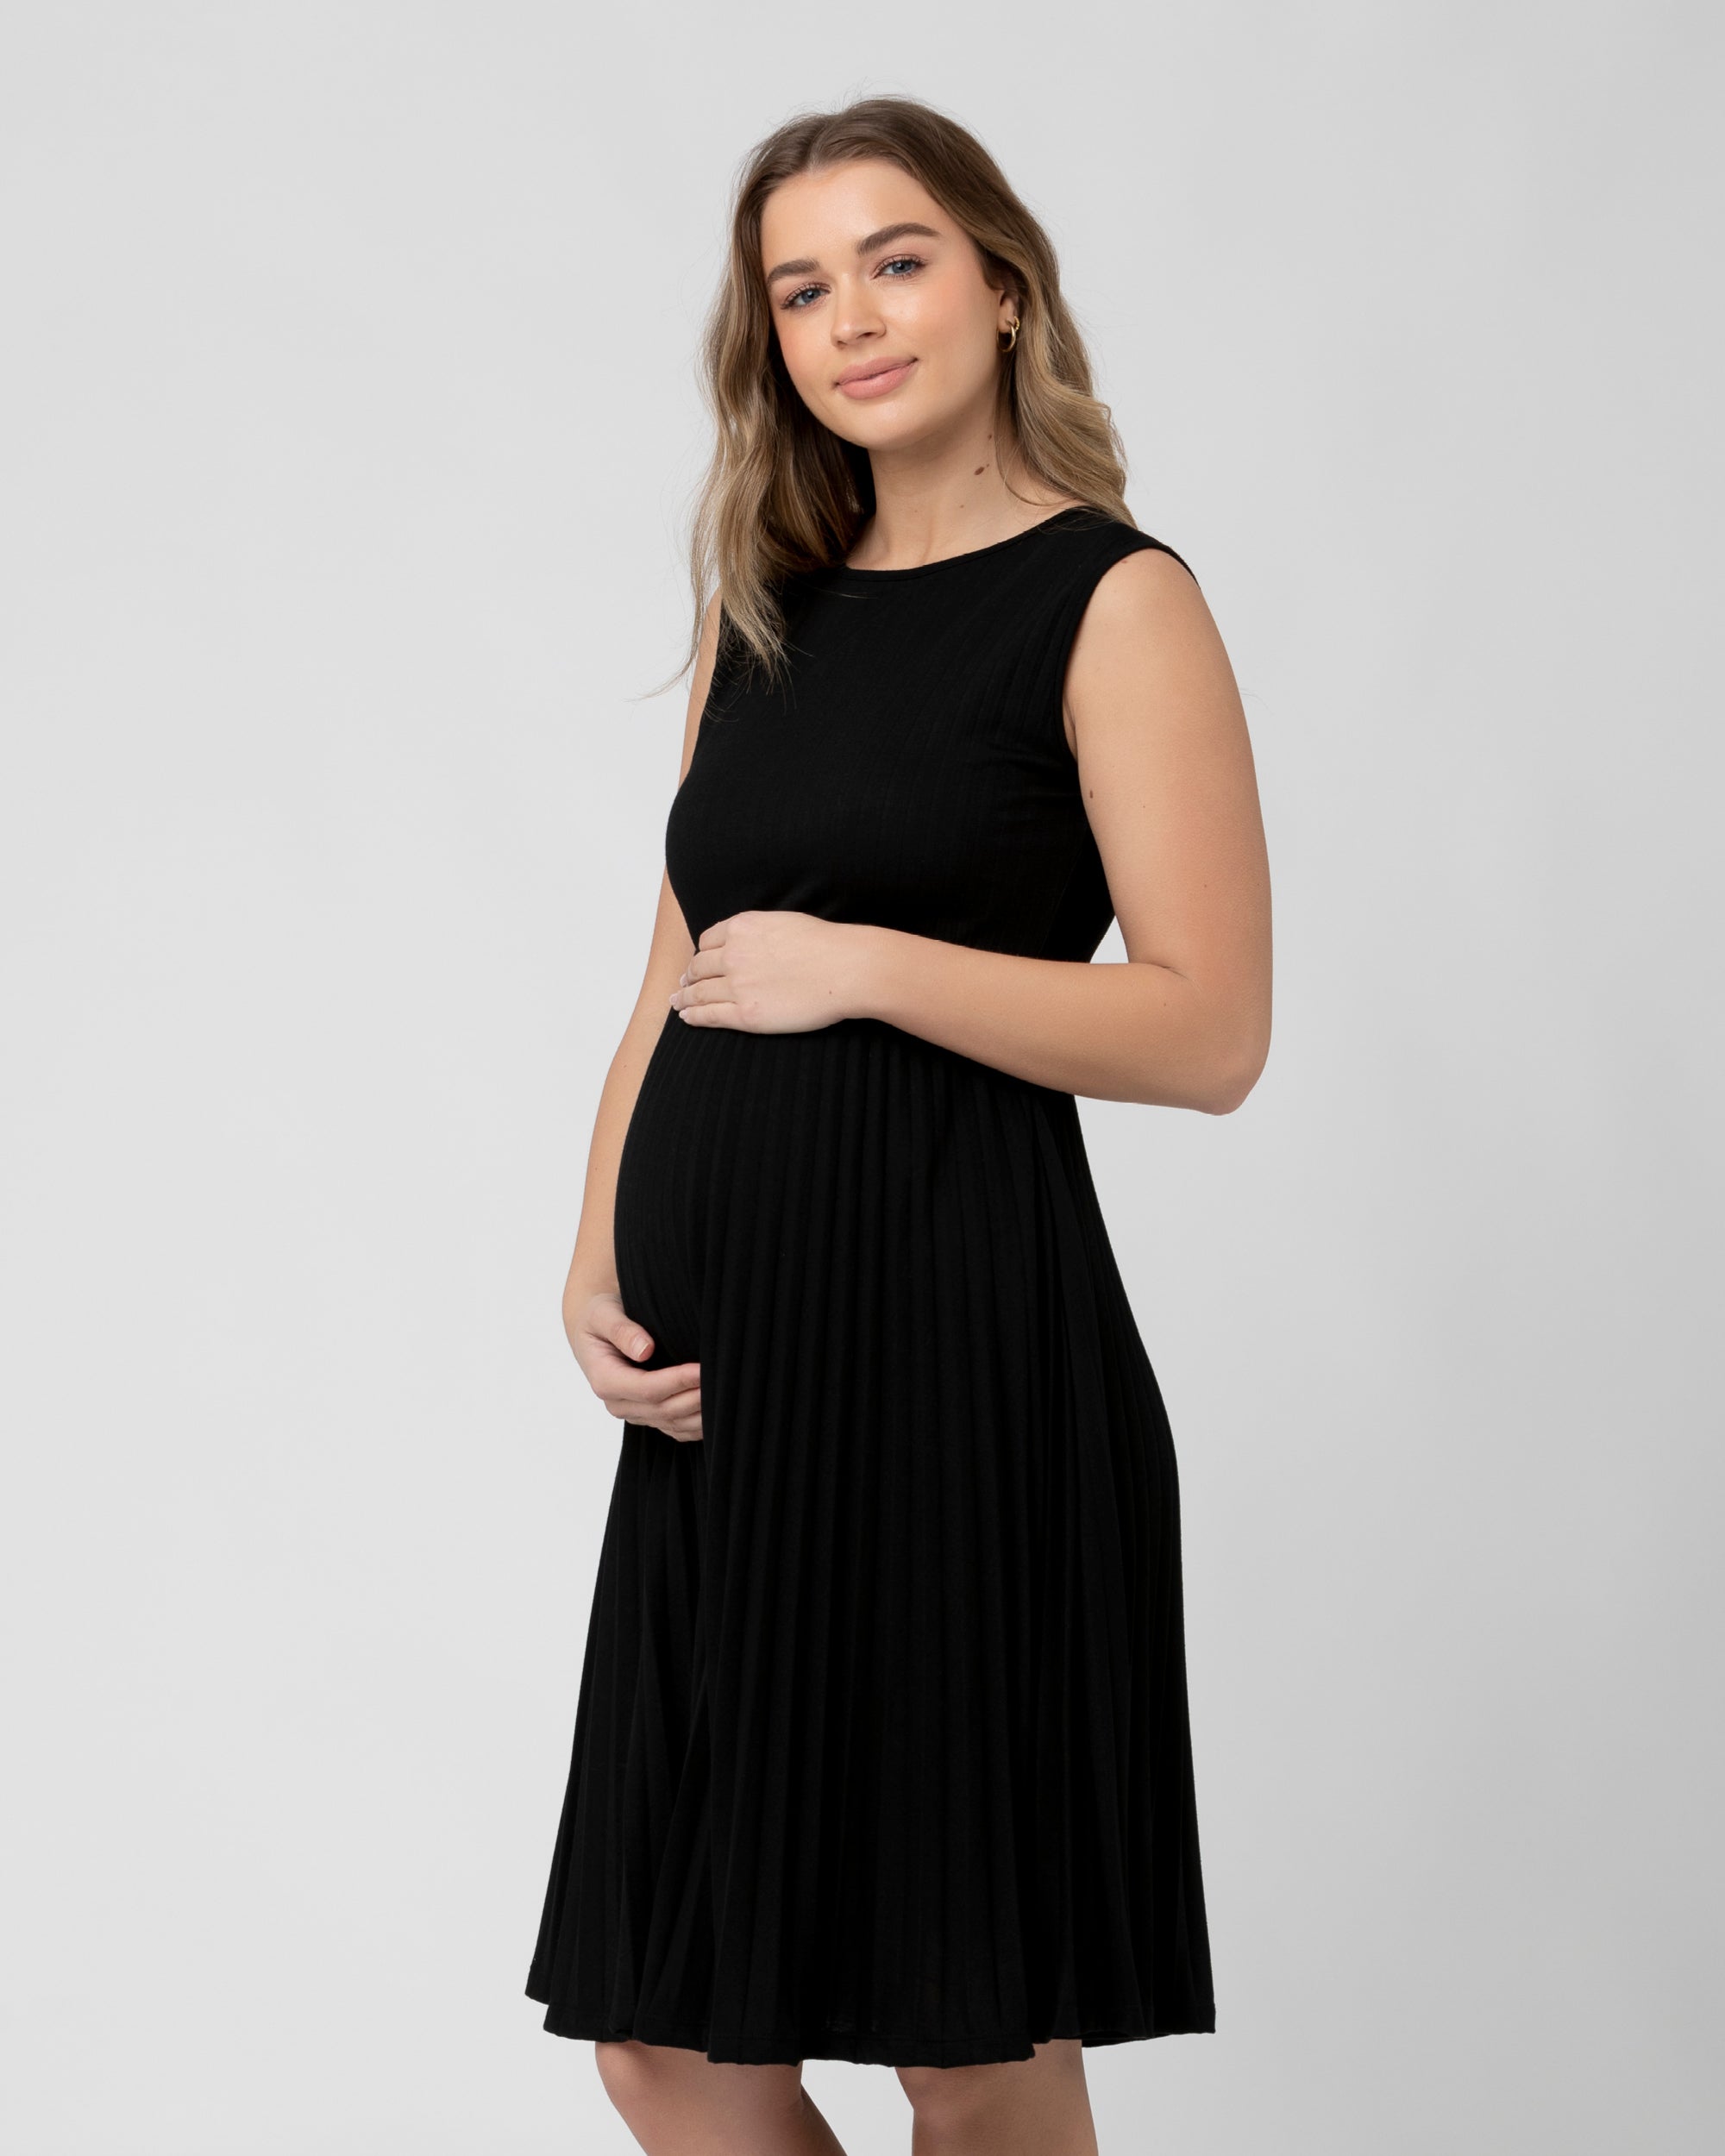 Ripe Maternity Sloane Knit Dress Black